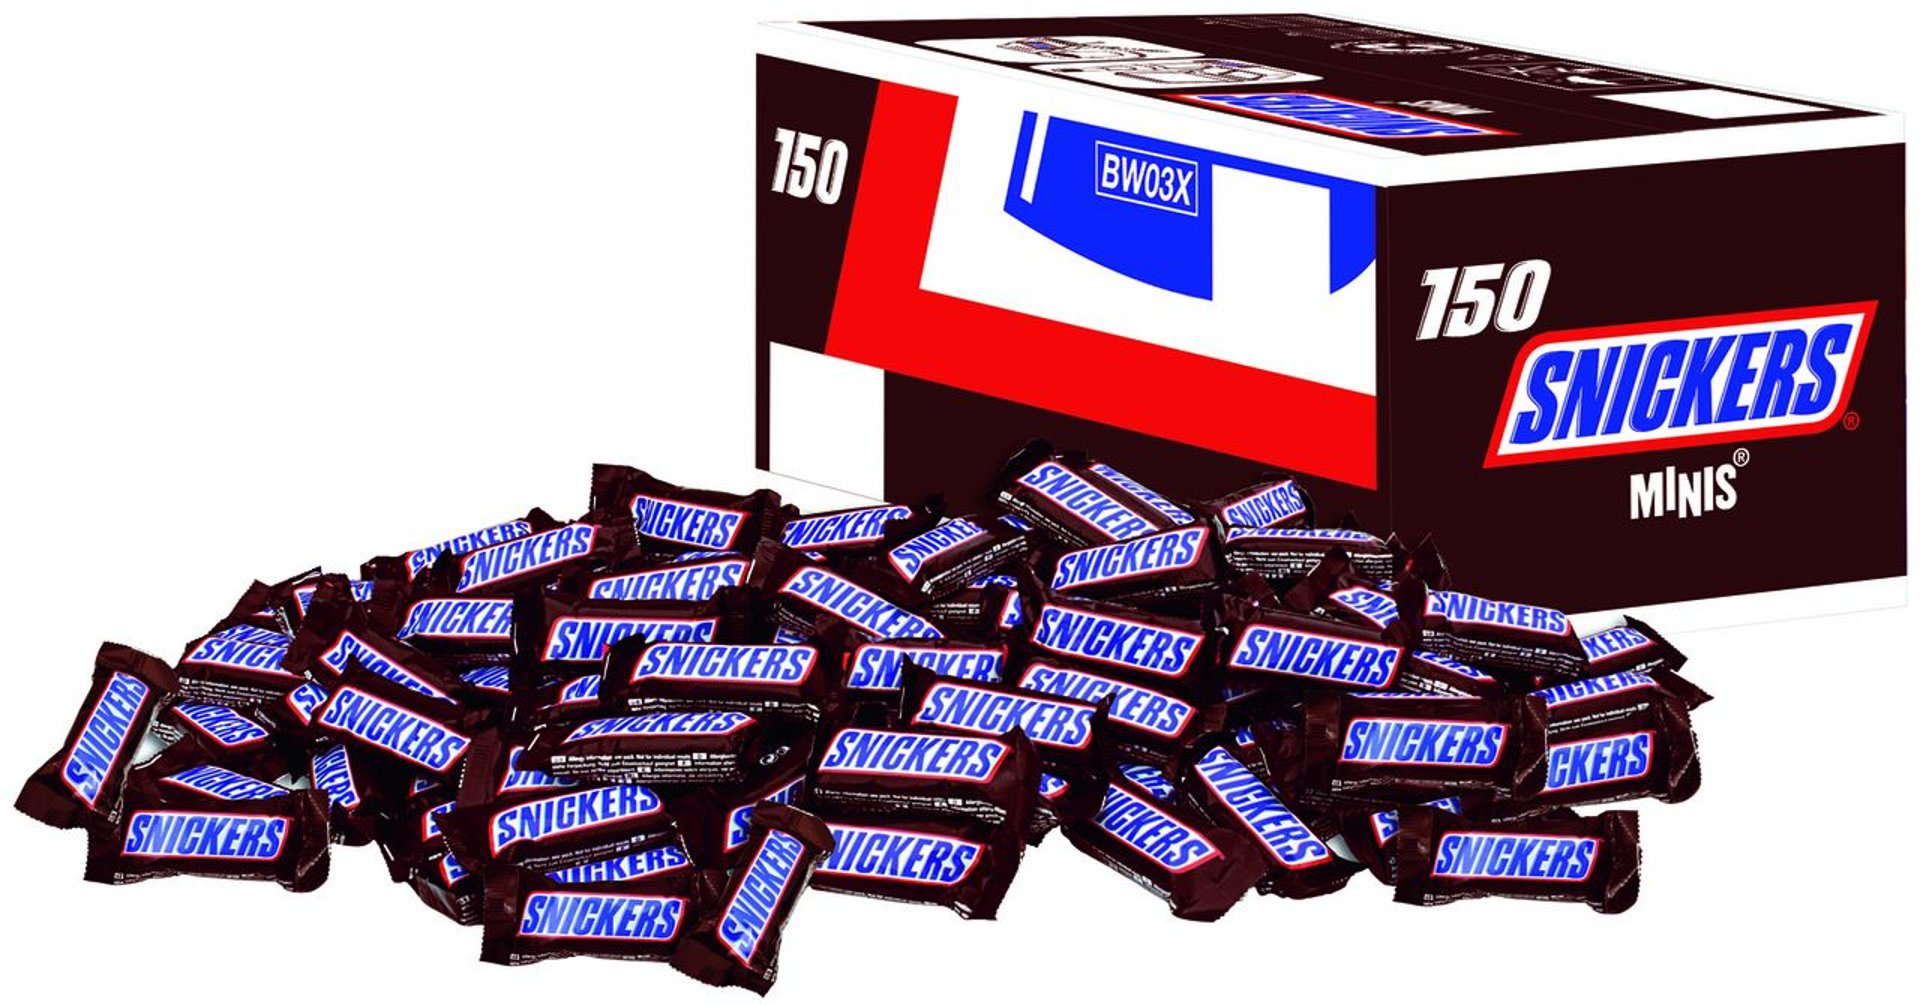 Milky Way - Schokoriegel Minis Catering Box Snicker 150 Stück à 18,8 g, ca. 2,82 kg Karton